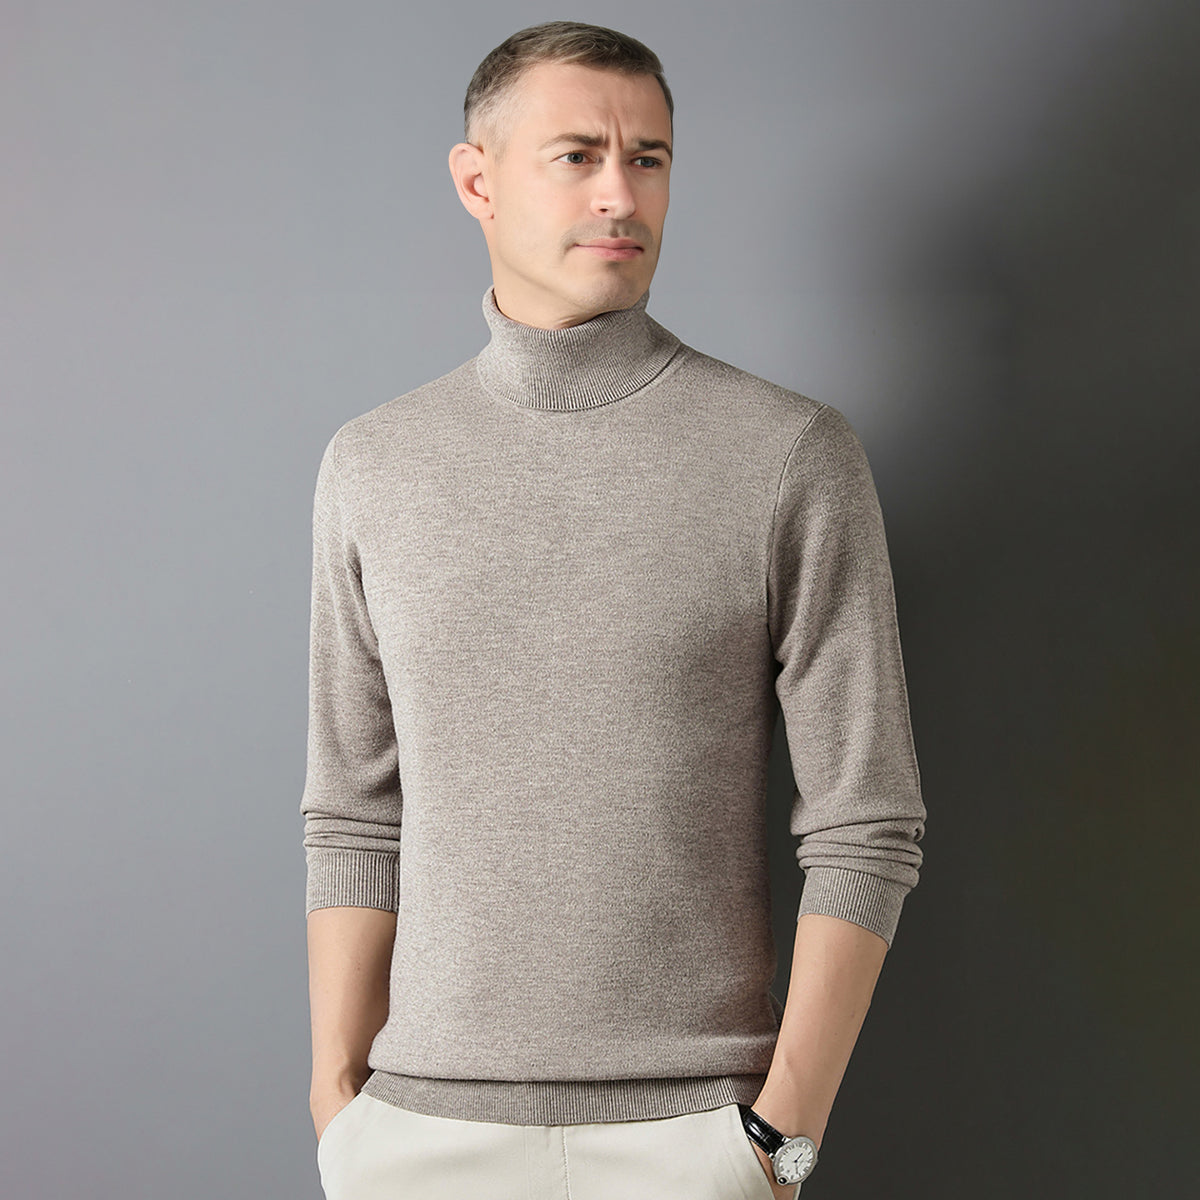 Men's Classic Wool Cashmere Soft Turtleneck Sweater